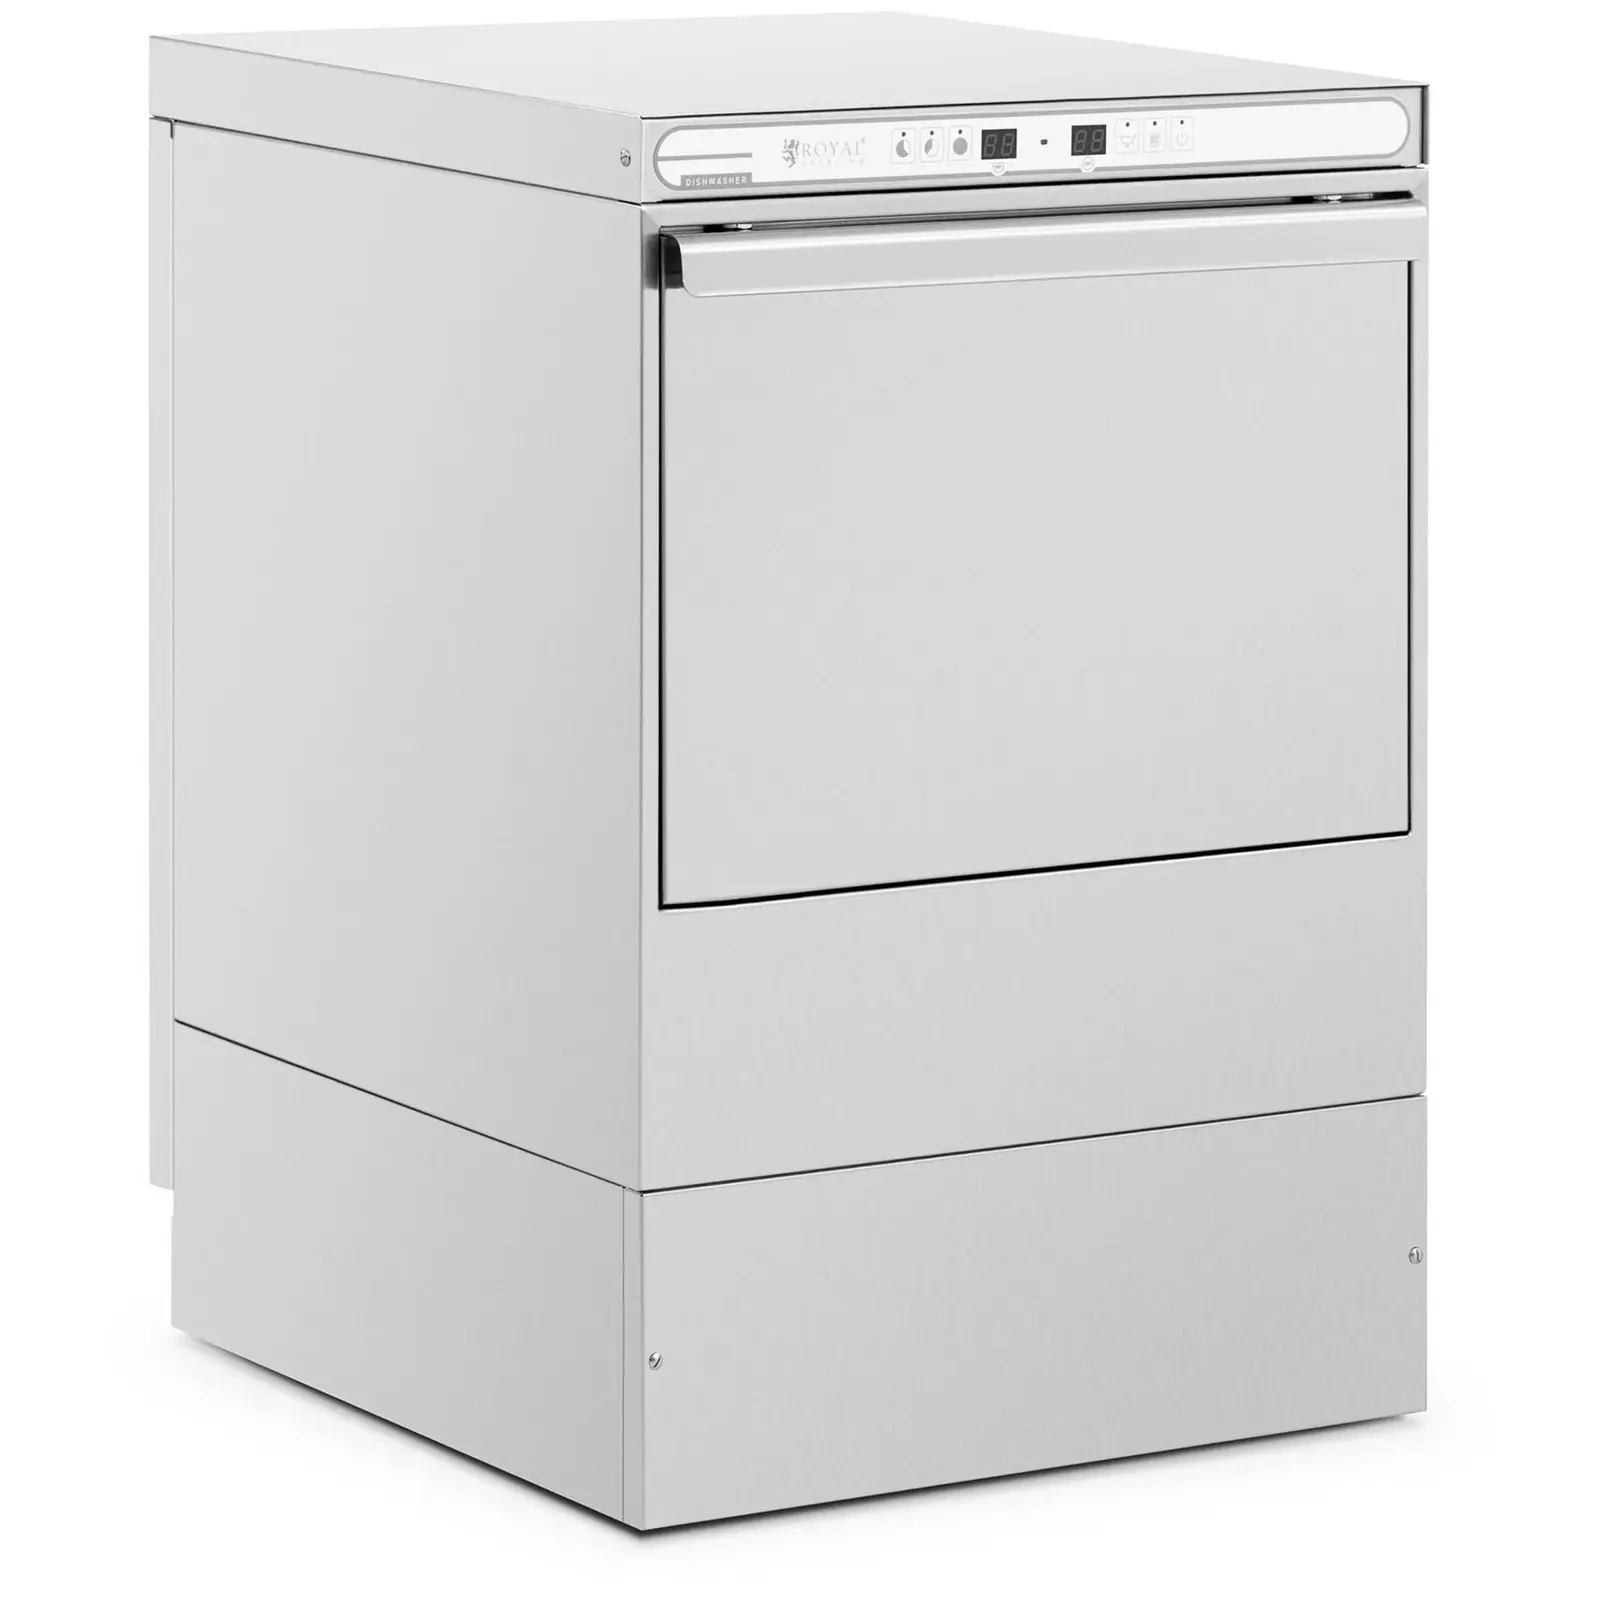 Máquina de lavar loiça - 6600 W - Royal Catering - aço inoxidável